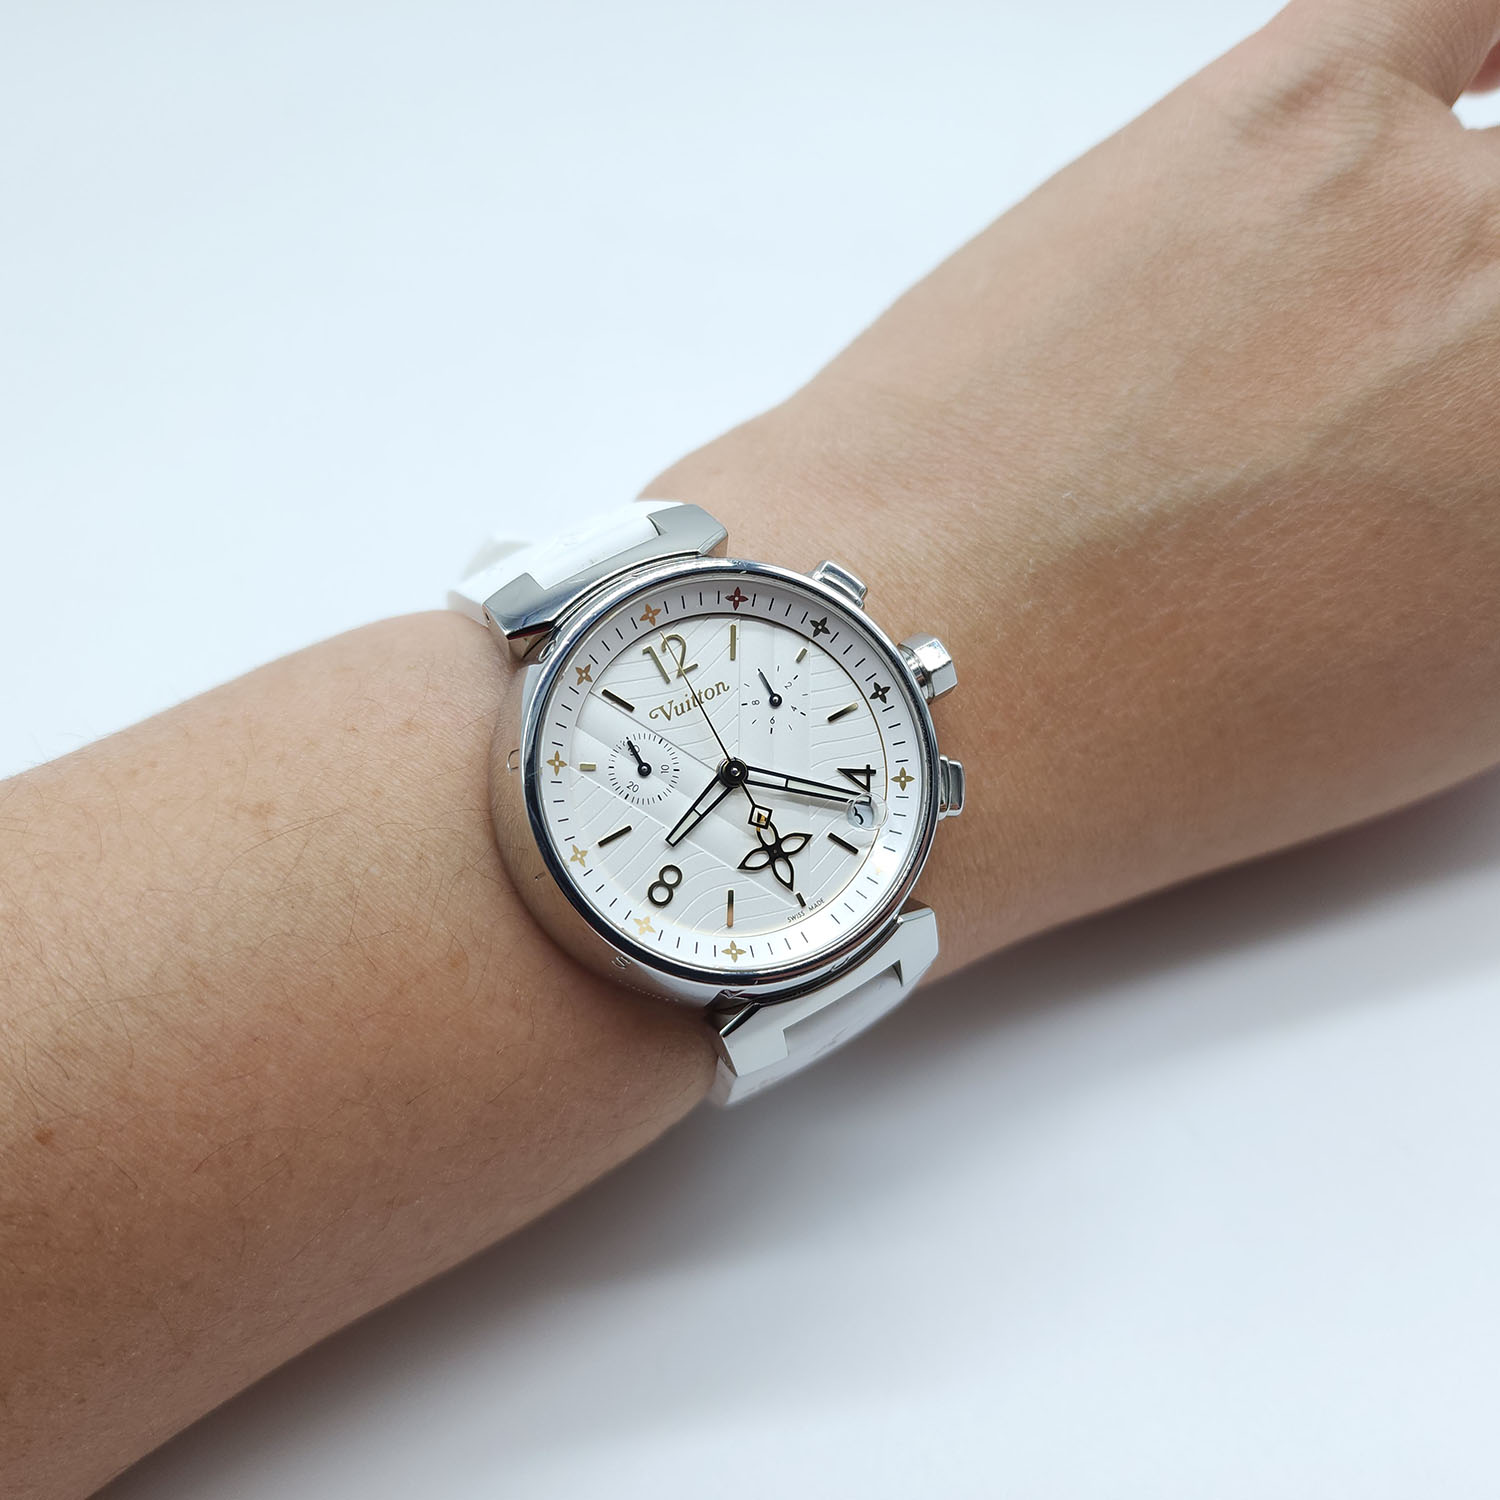 Louis Vuitton Reveals Tambour New Wave Watch